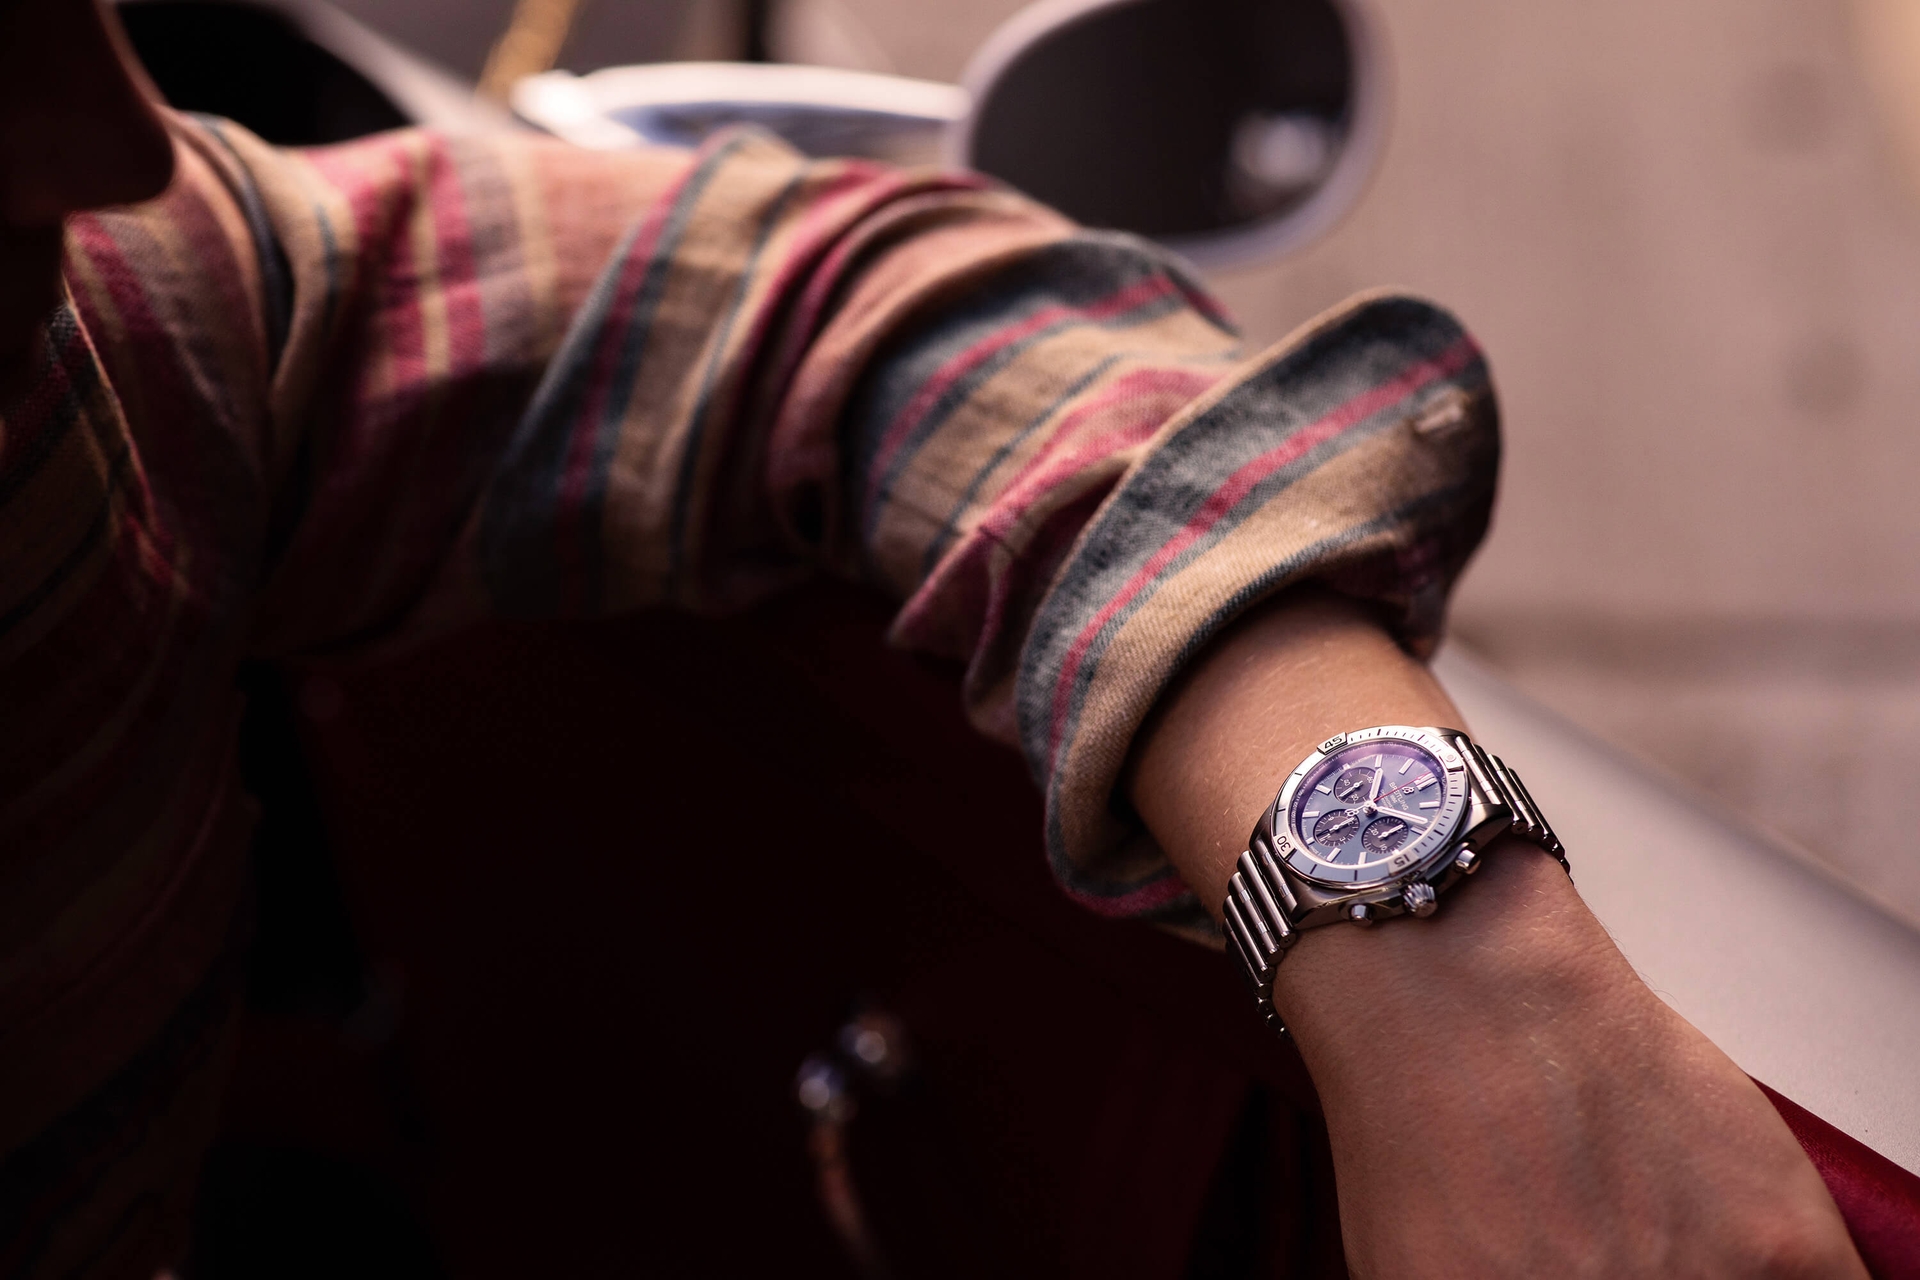 Man wearing striped shirt wearing Breitling watch